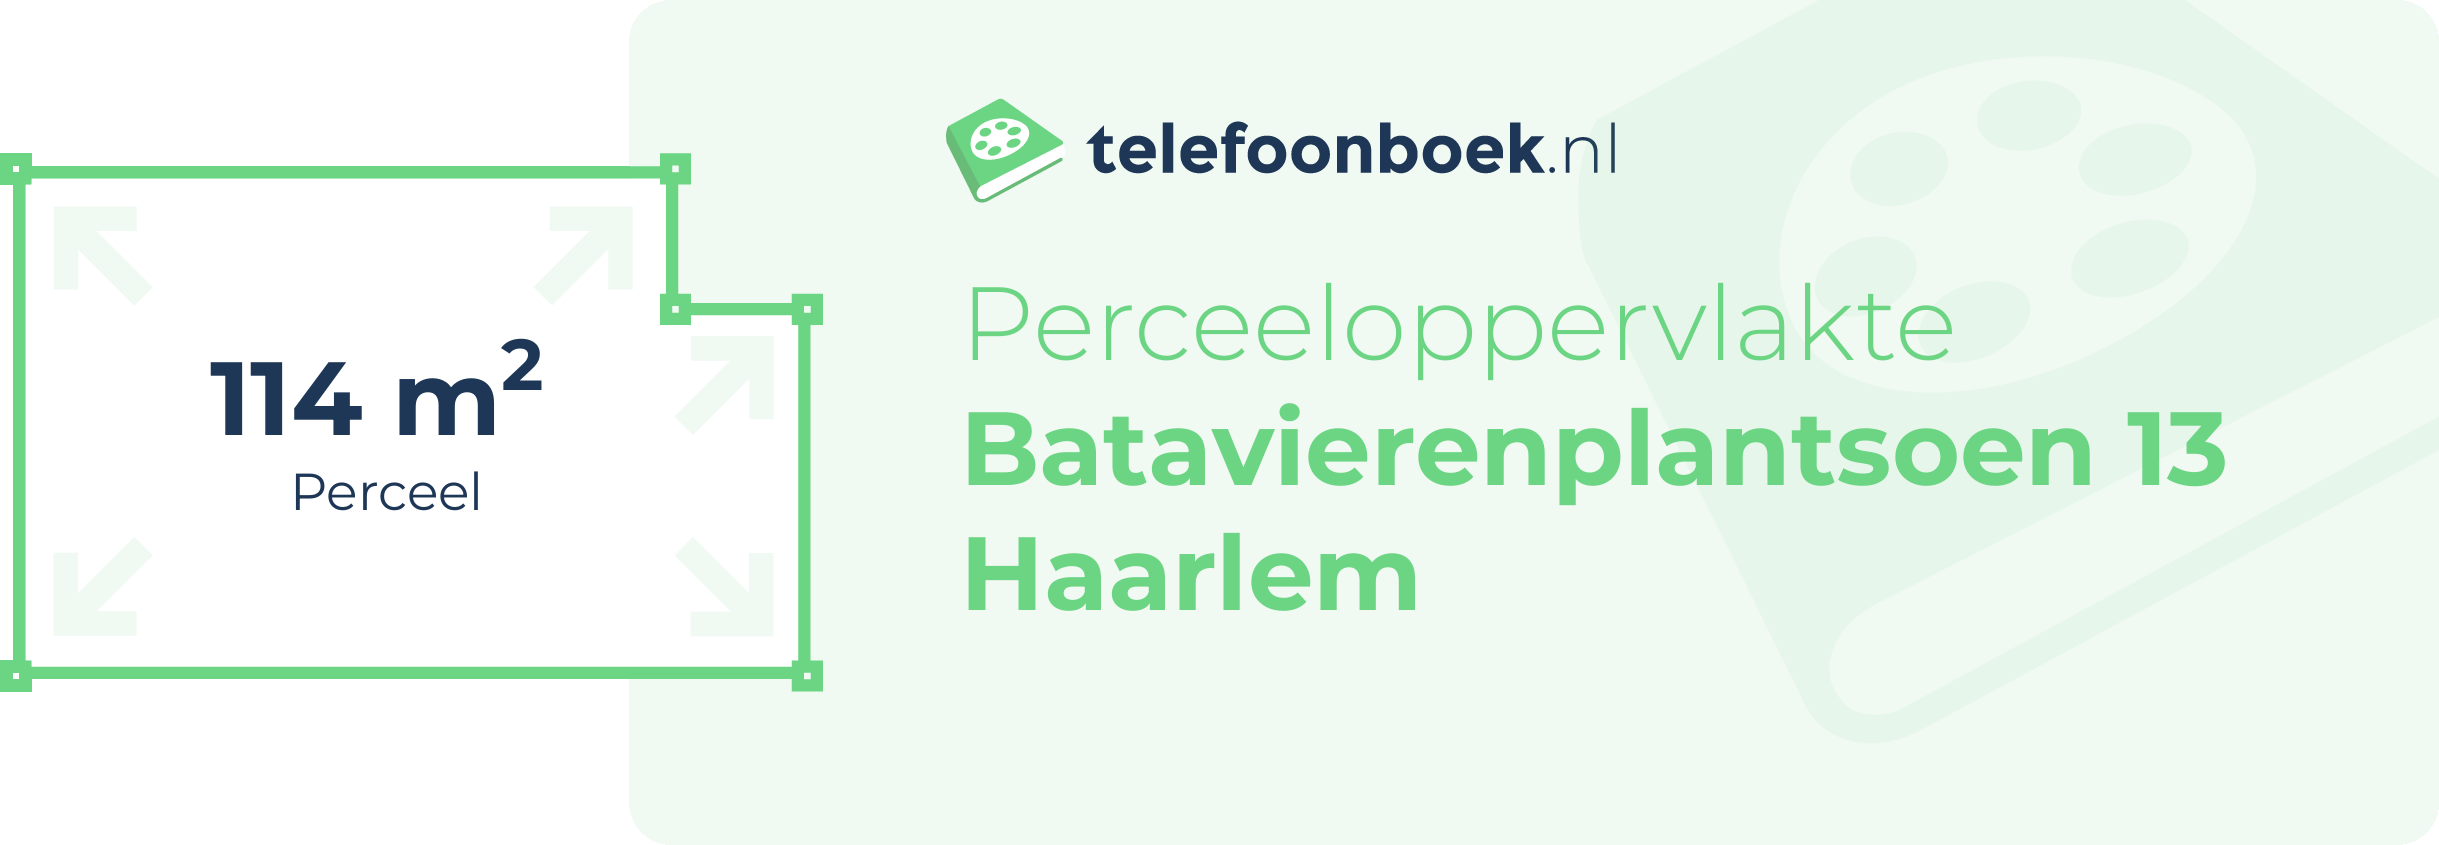 Perceeloppervlakte Batavierenplantsoen 13 Haarlem